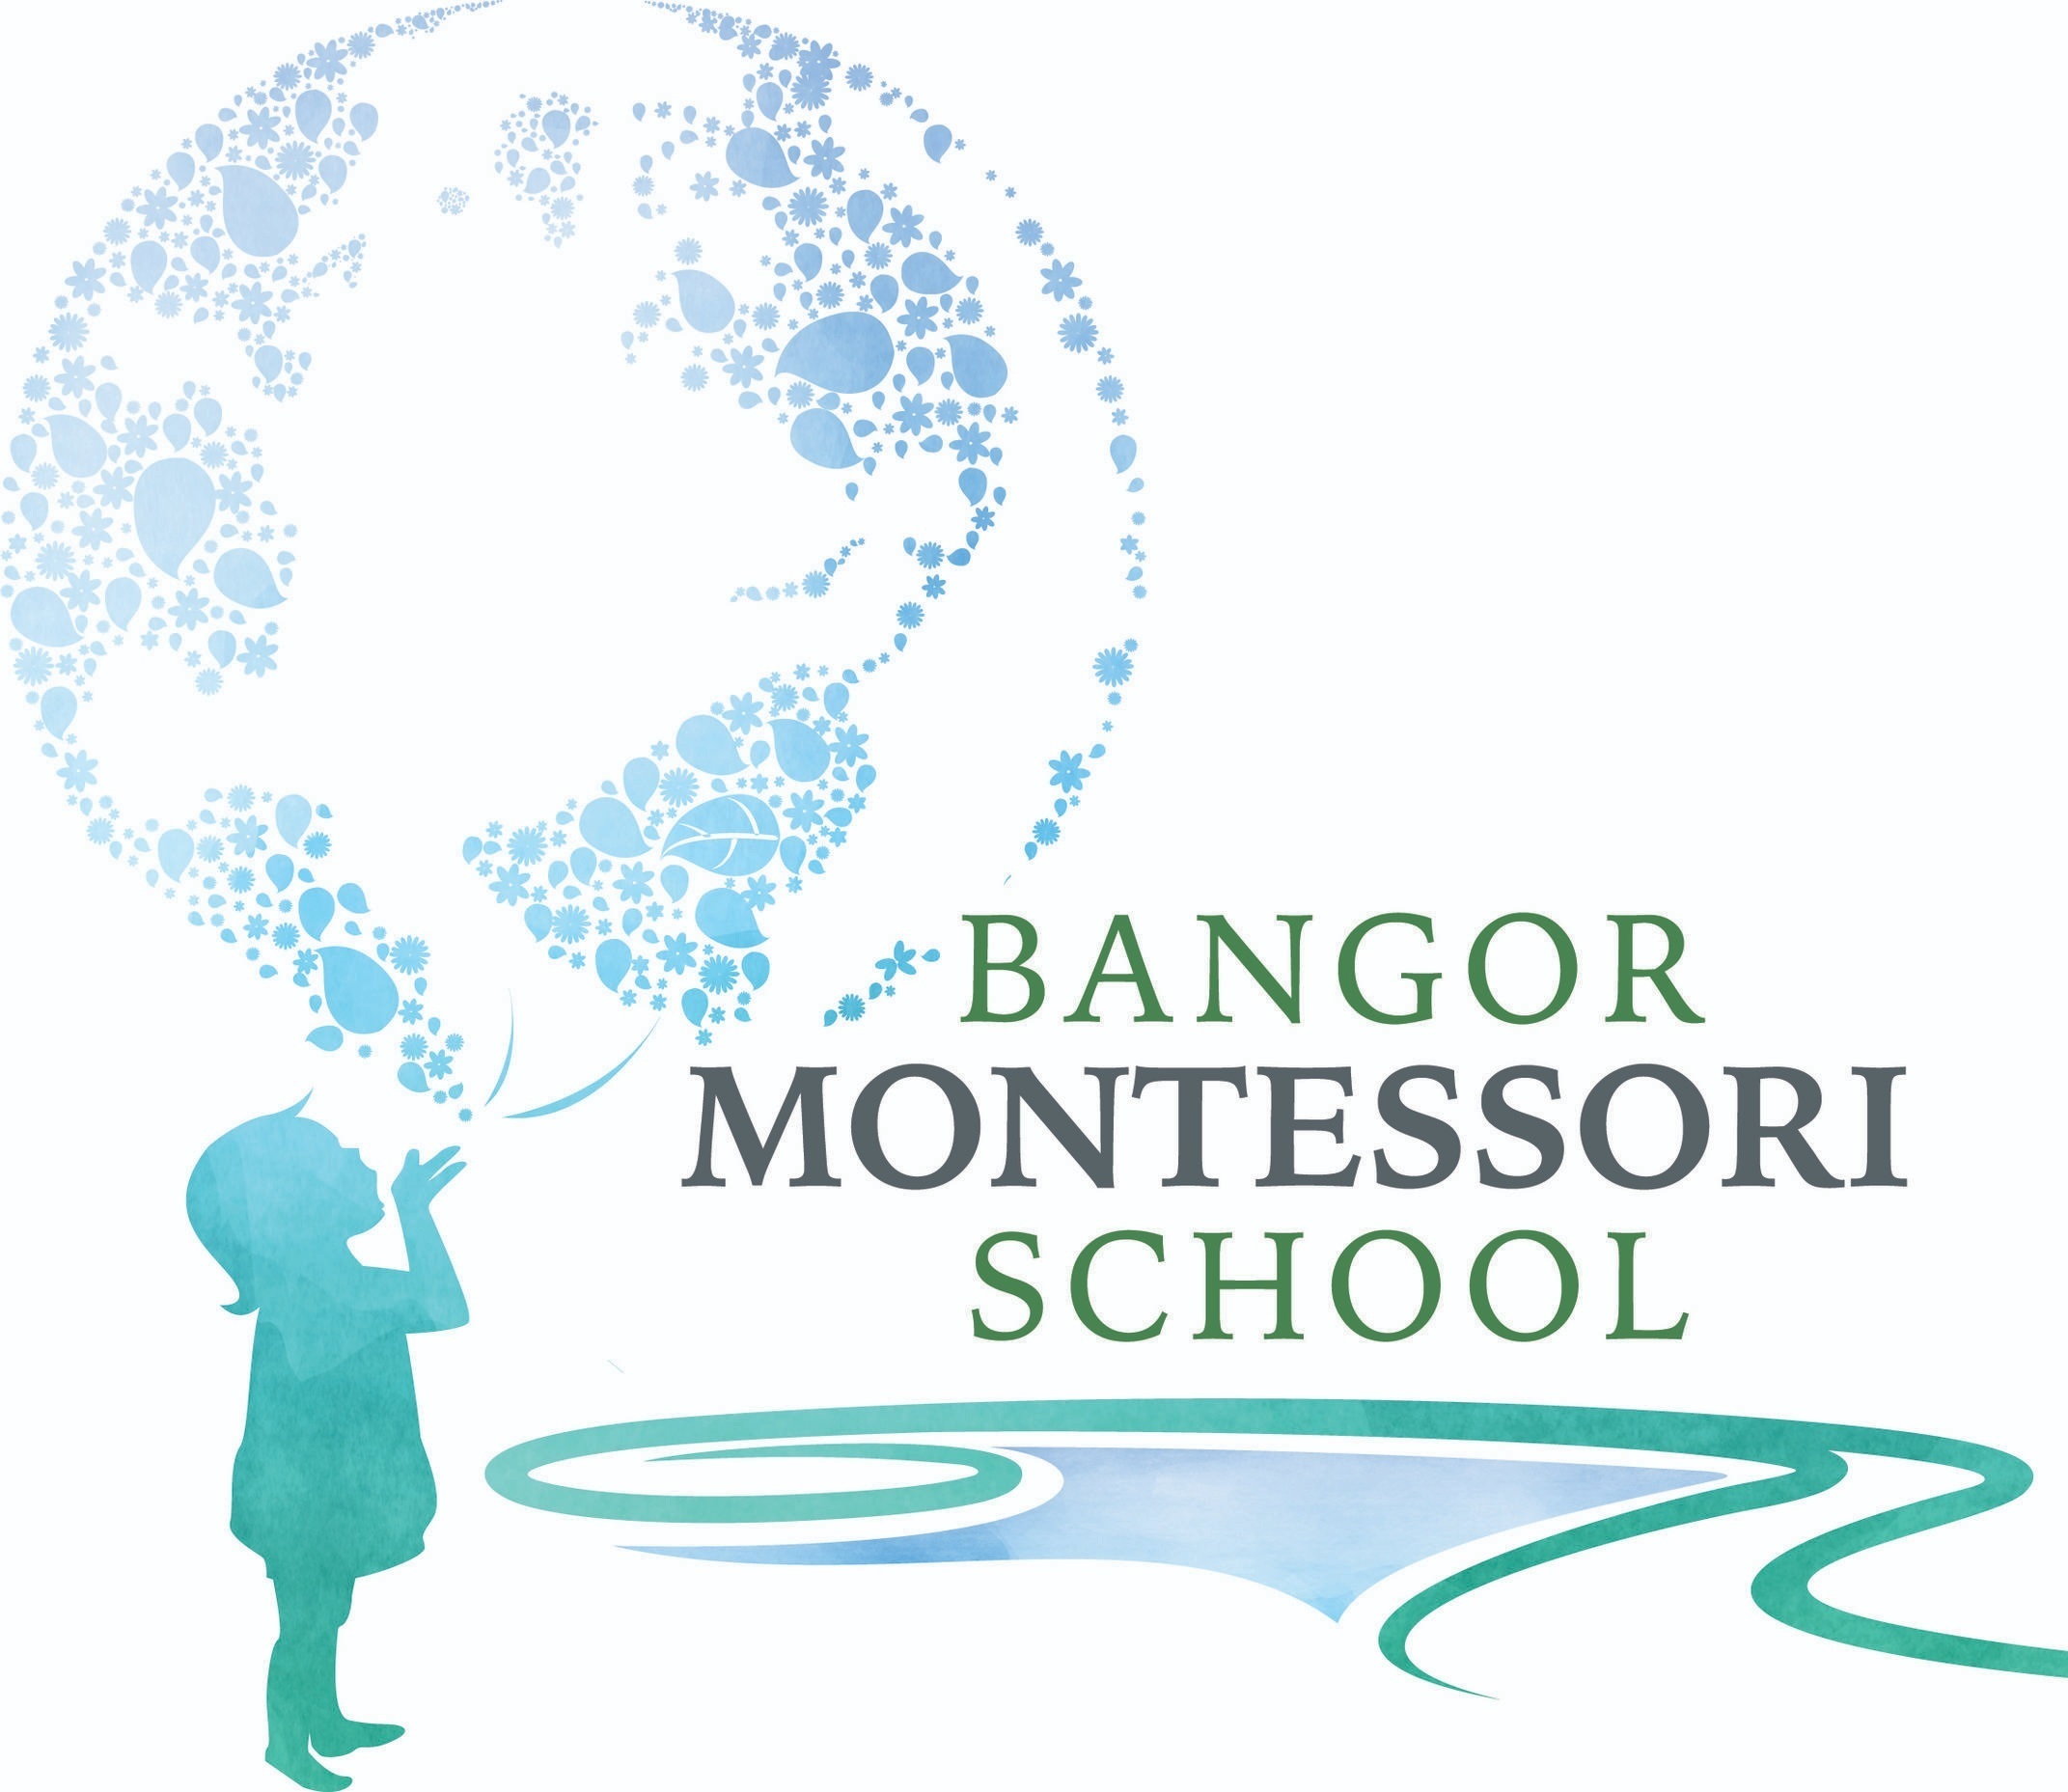 Bangor Montessori School